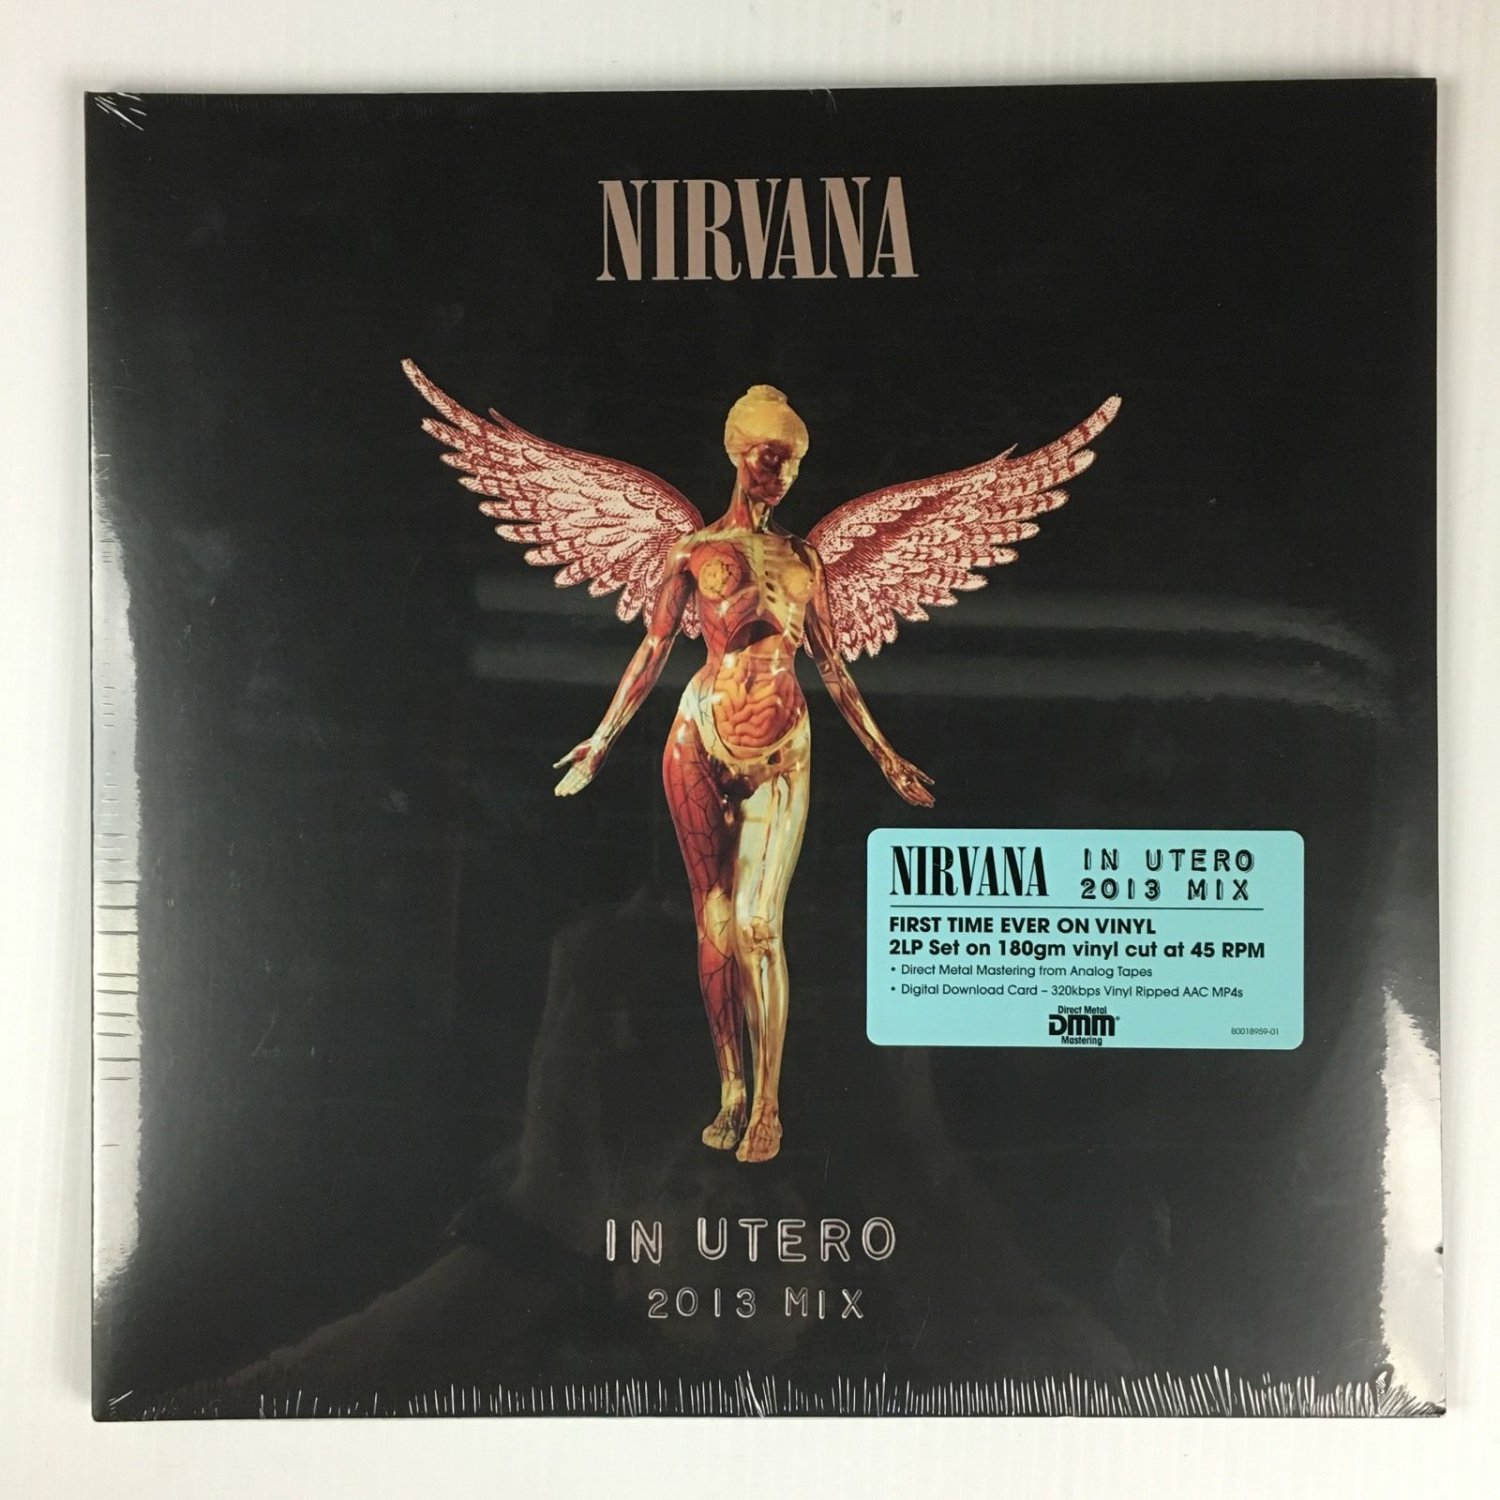 Nirvana - In Utero (2013 Mix) 2LP Record - BRAND NEW - 20th Anniversary